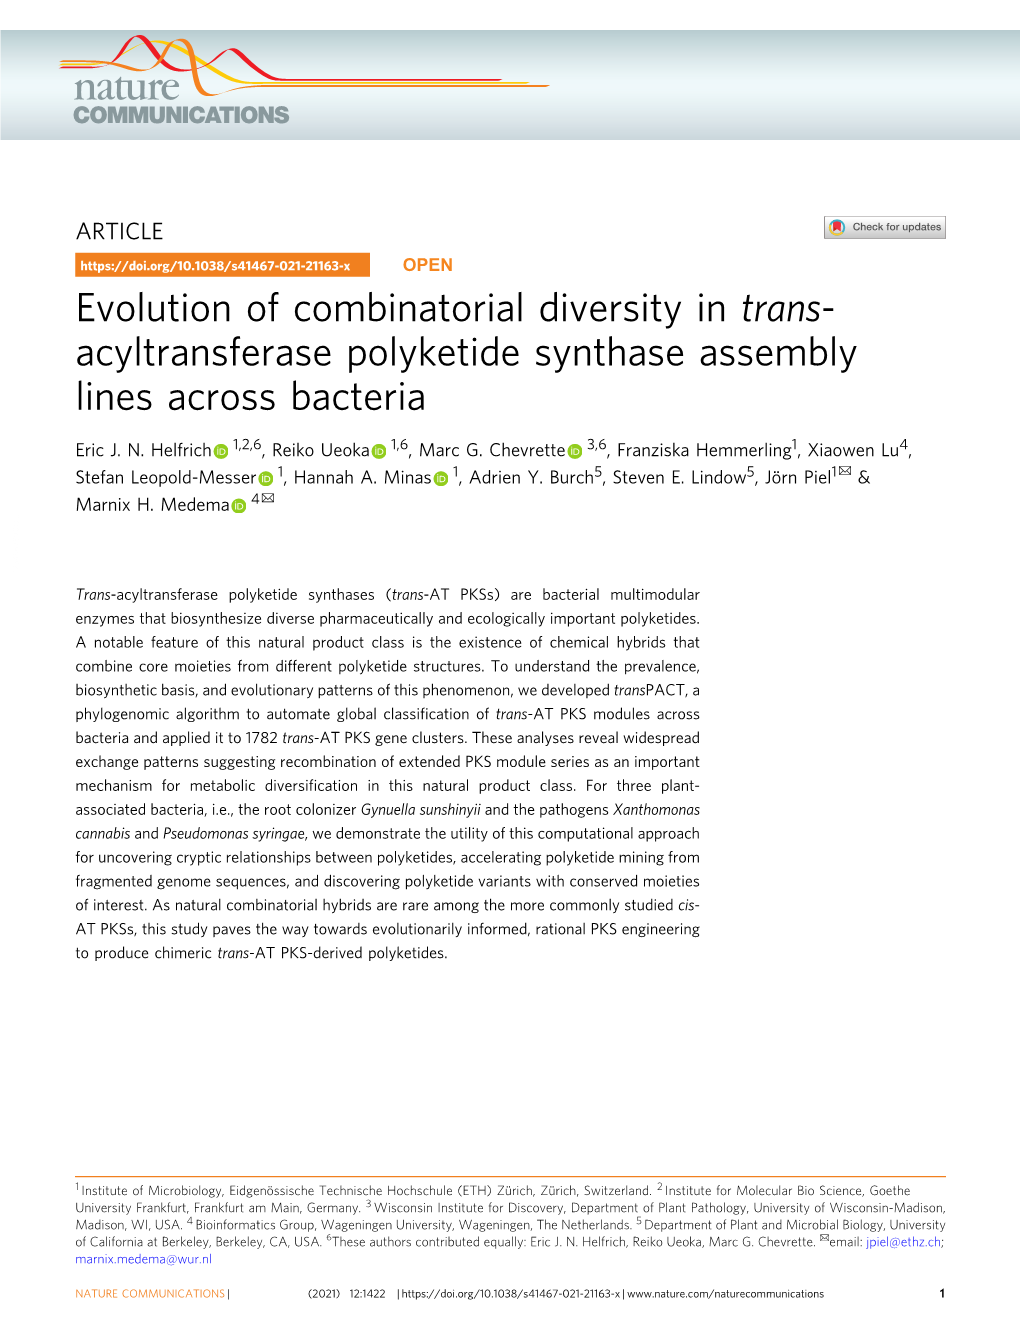 Evolution of Combinatorial Diversity in Trans-Acyltransferase Polyketide